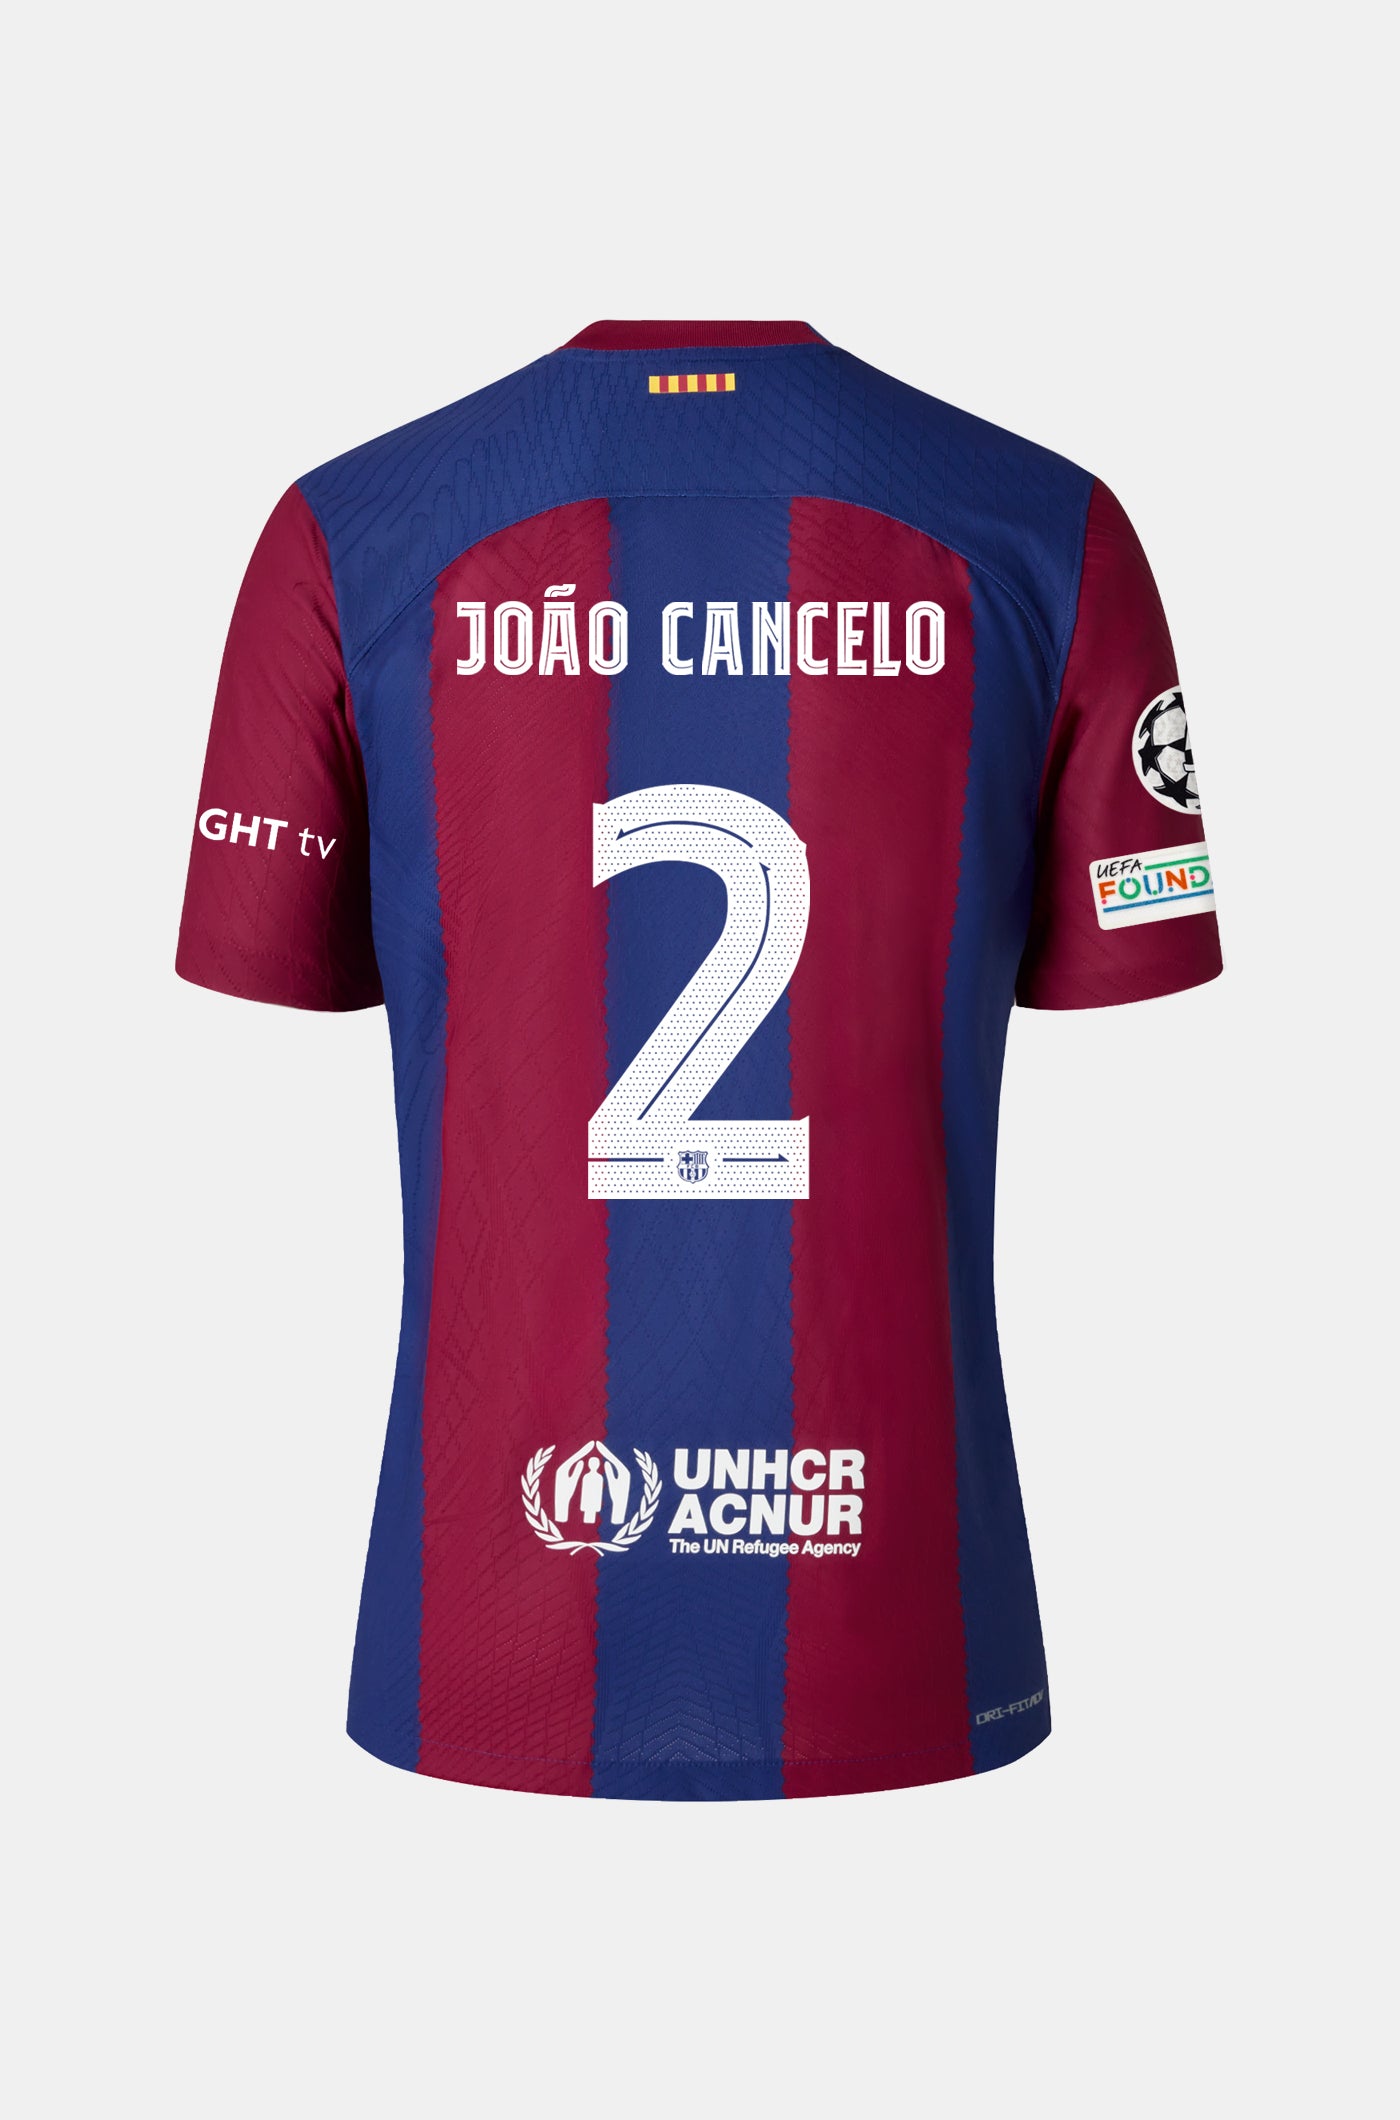 UCL FC Barcelona Home Shirt 23/24 Player's Edition - Women - JOÃO CANCELO